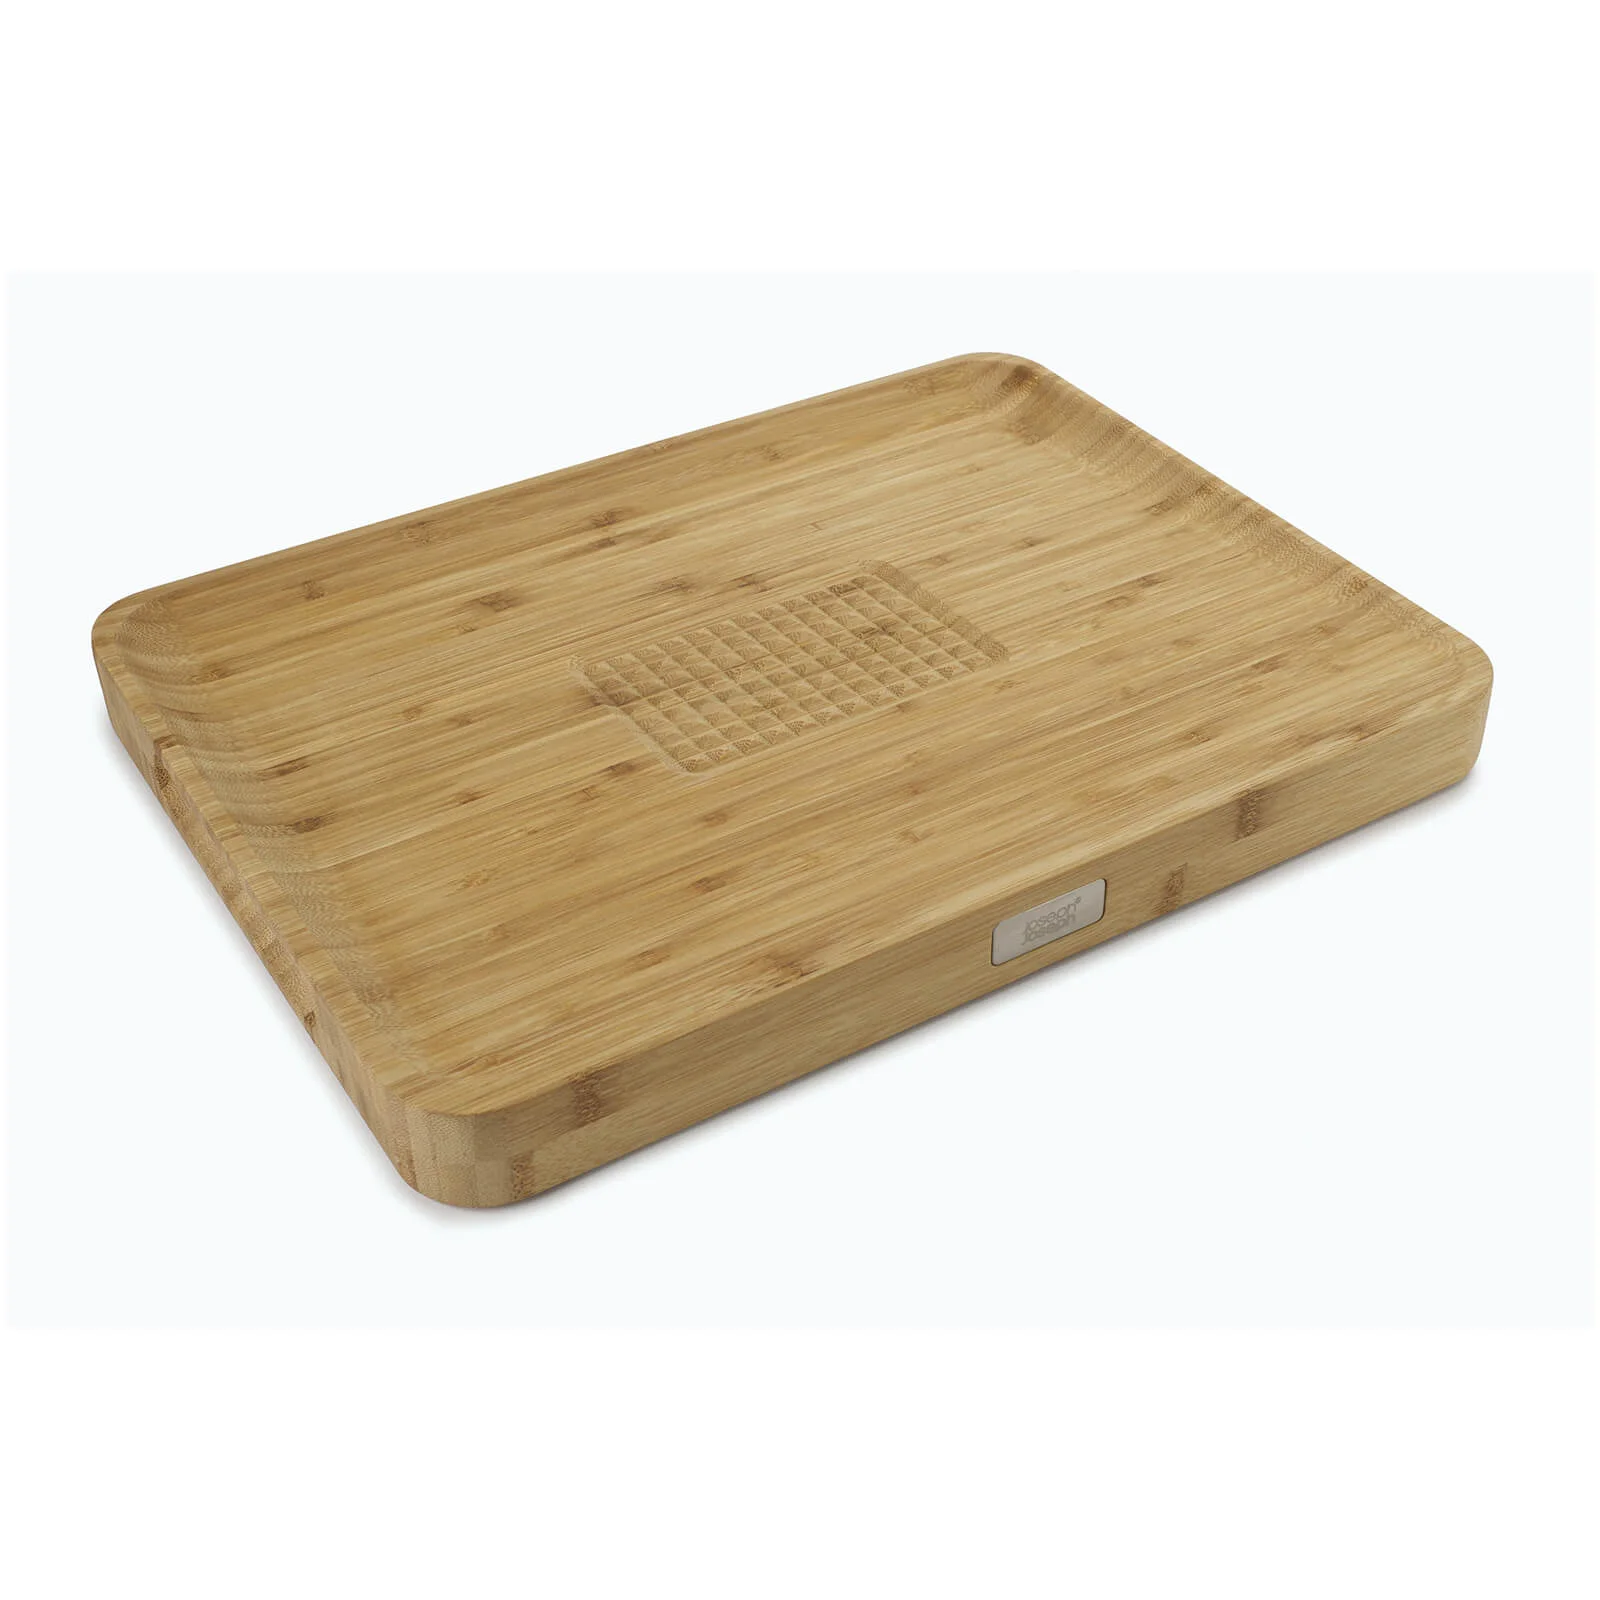 Joseph Joseph Cut & Carve Chopping Board - Bamboo Image 1